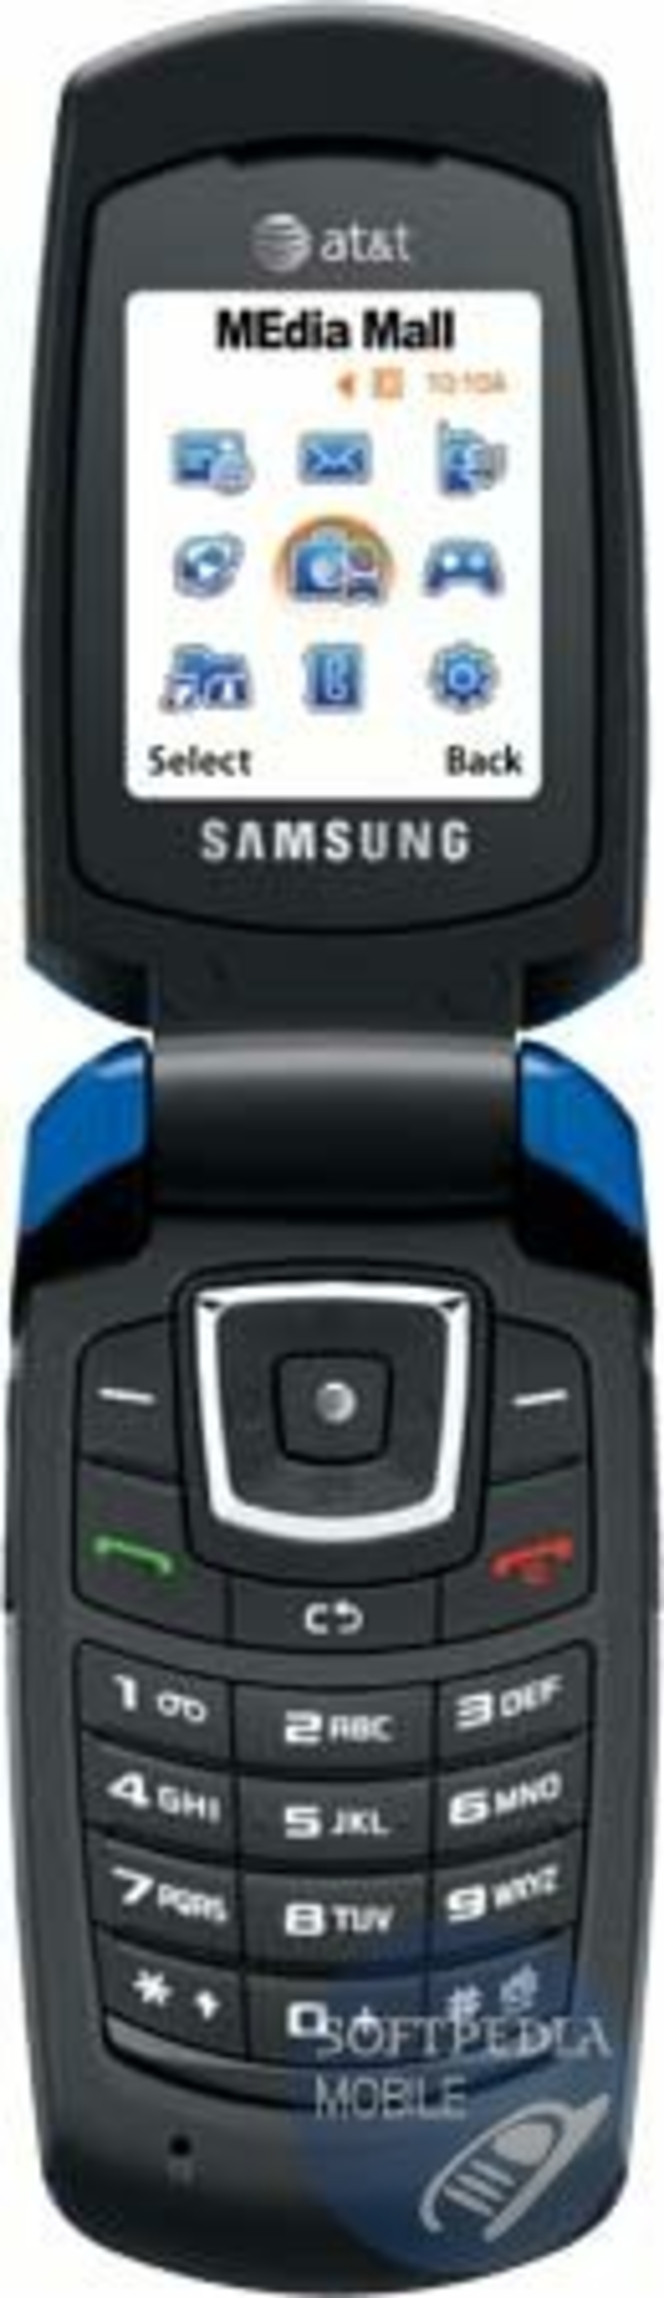 Samsung A167 3